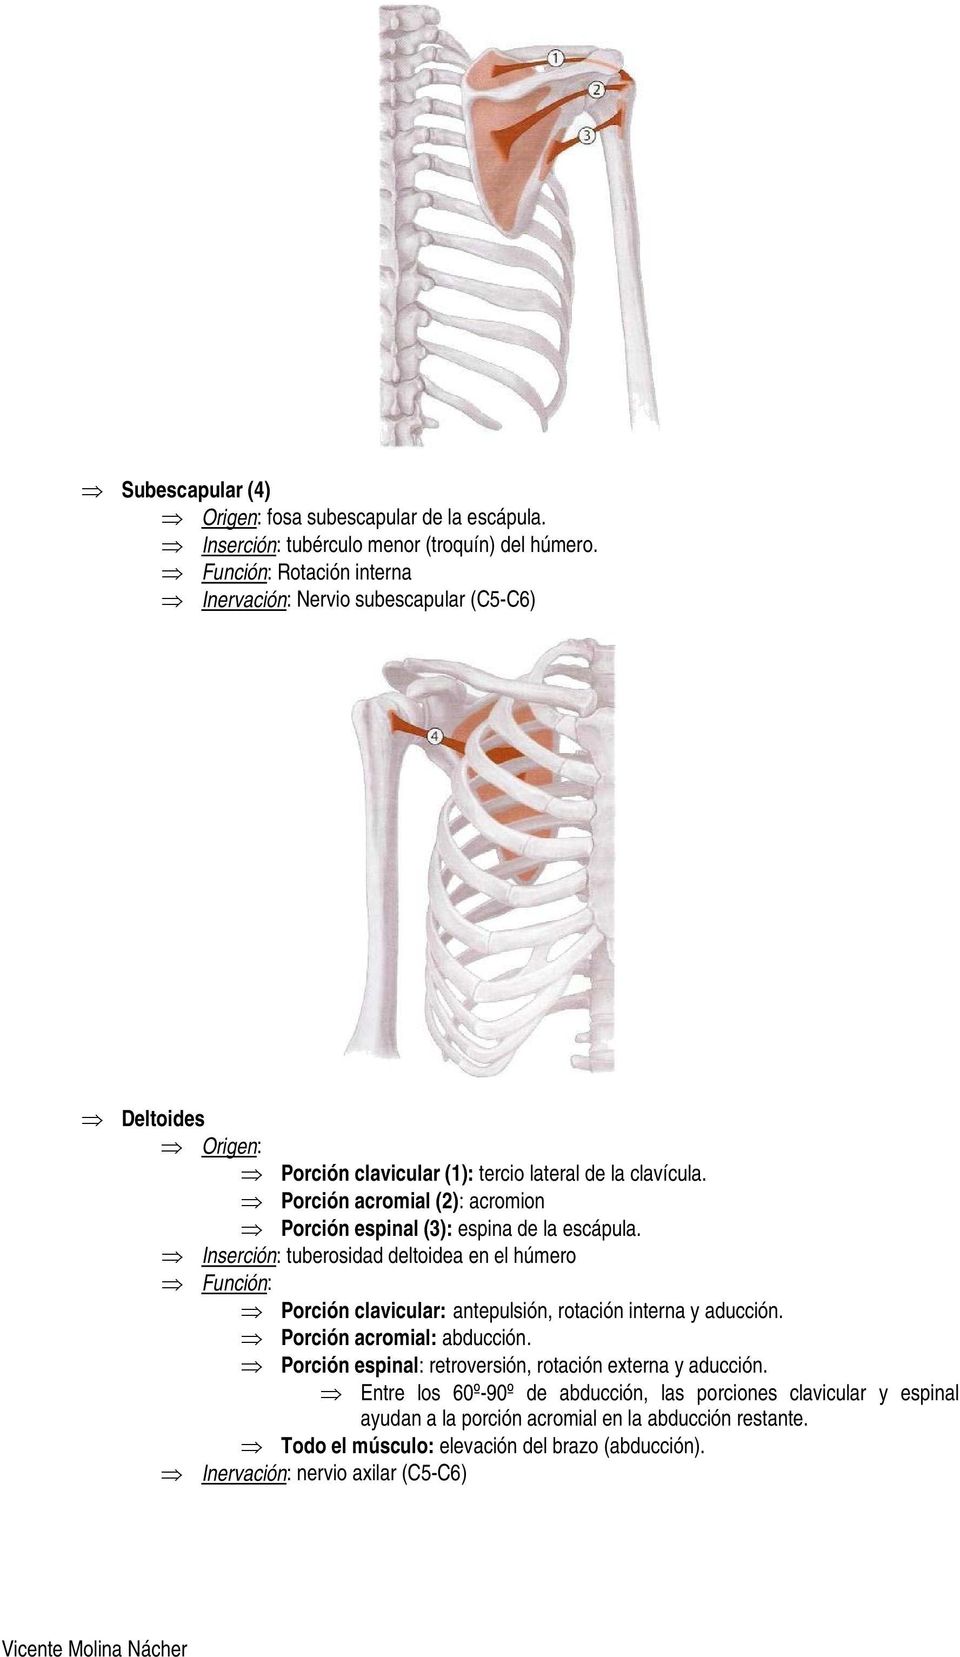 Porción acromial (2): acromion Porción espinal (3): espina de la escápula.